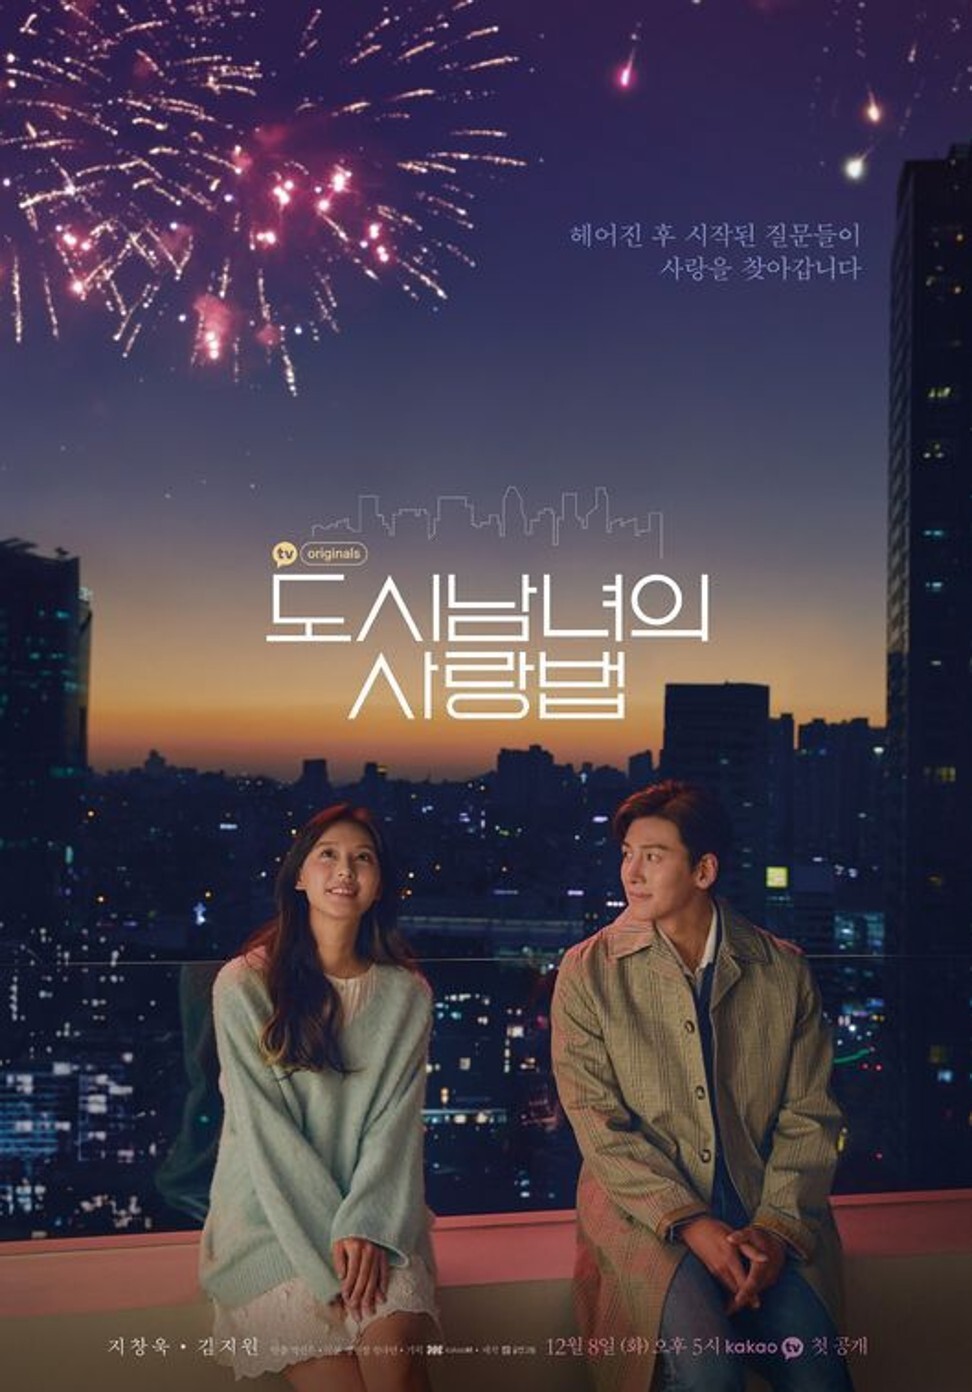 Suzy Bae Returns to her Kpop Roots in Netflix's “Doona” with a